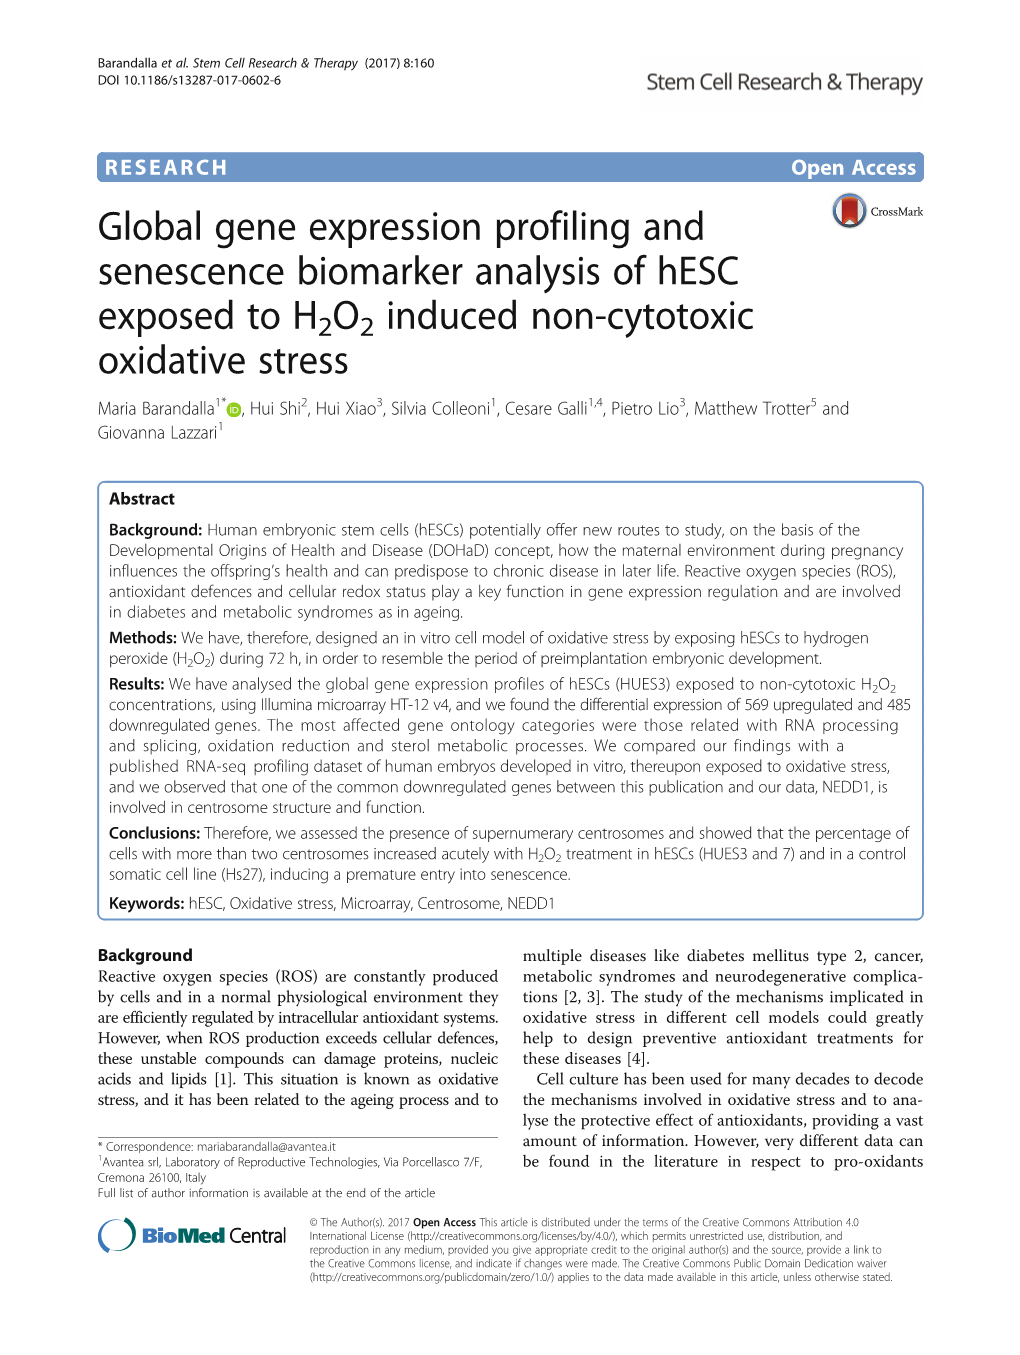 Global Gene Expression Profiling and Senescence Biomarker Analysis Of